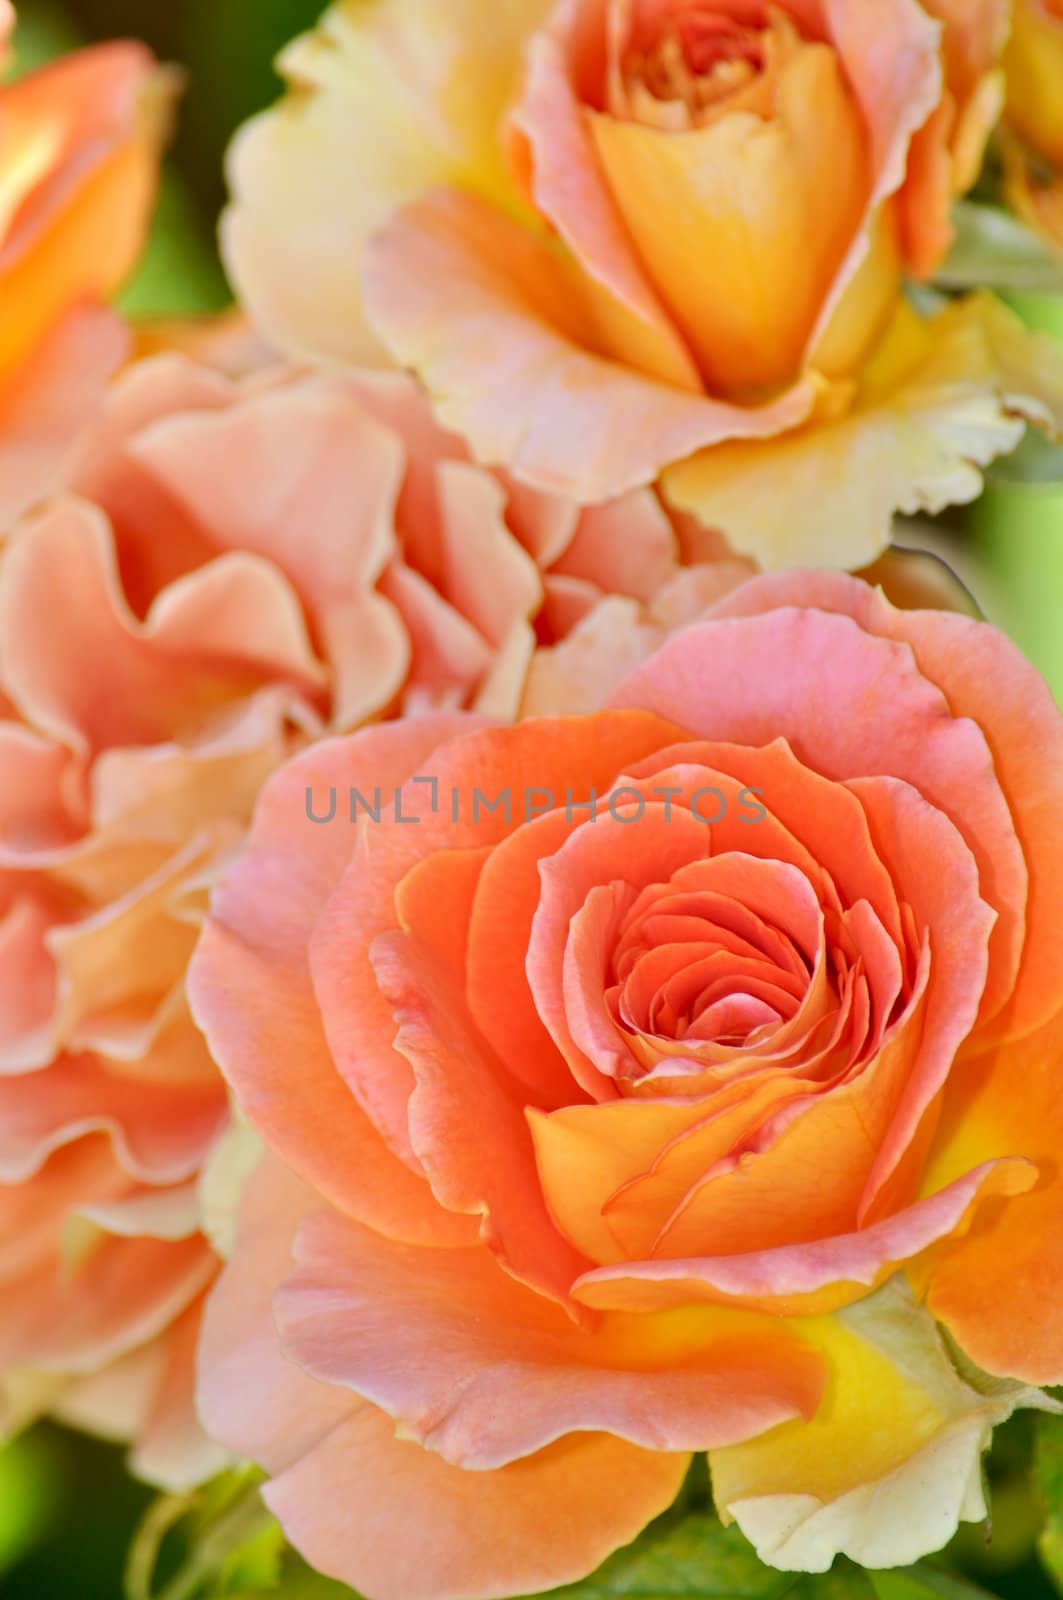 Orange hybrid tea rose by ingperl